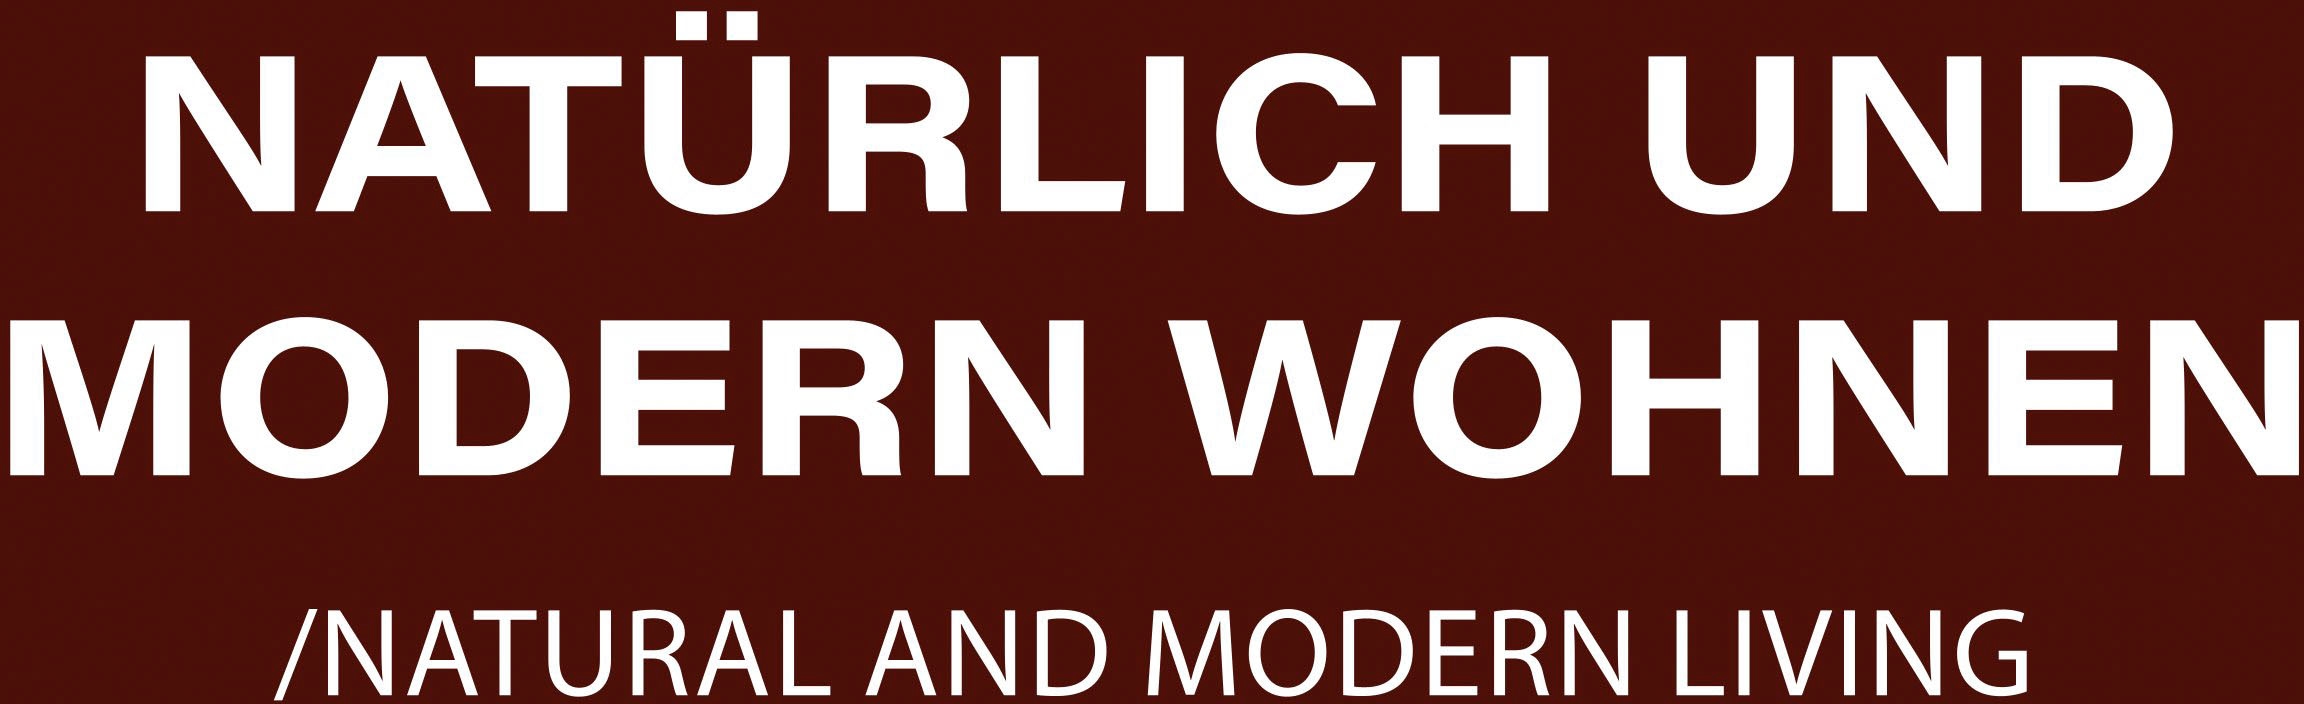 FISCHER & HONSEL Wandleuchte »Shine-Wood«, 2 flammig-flammig, made in Germany, langlebige LED